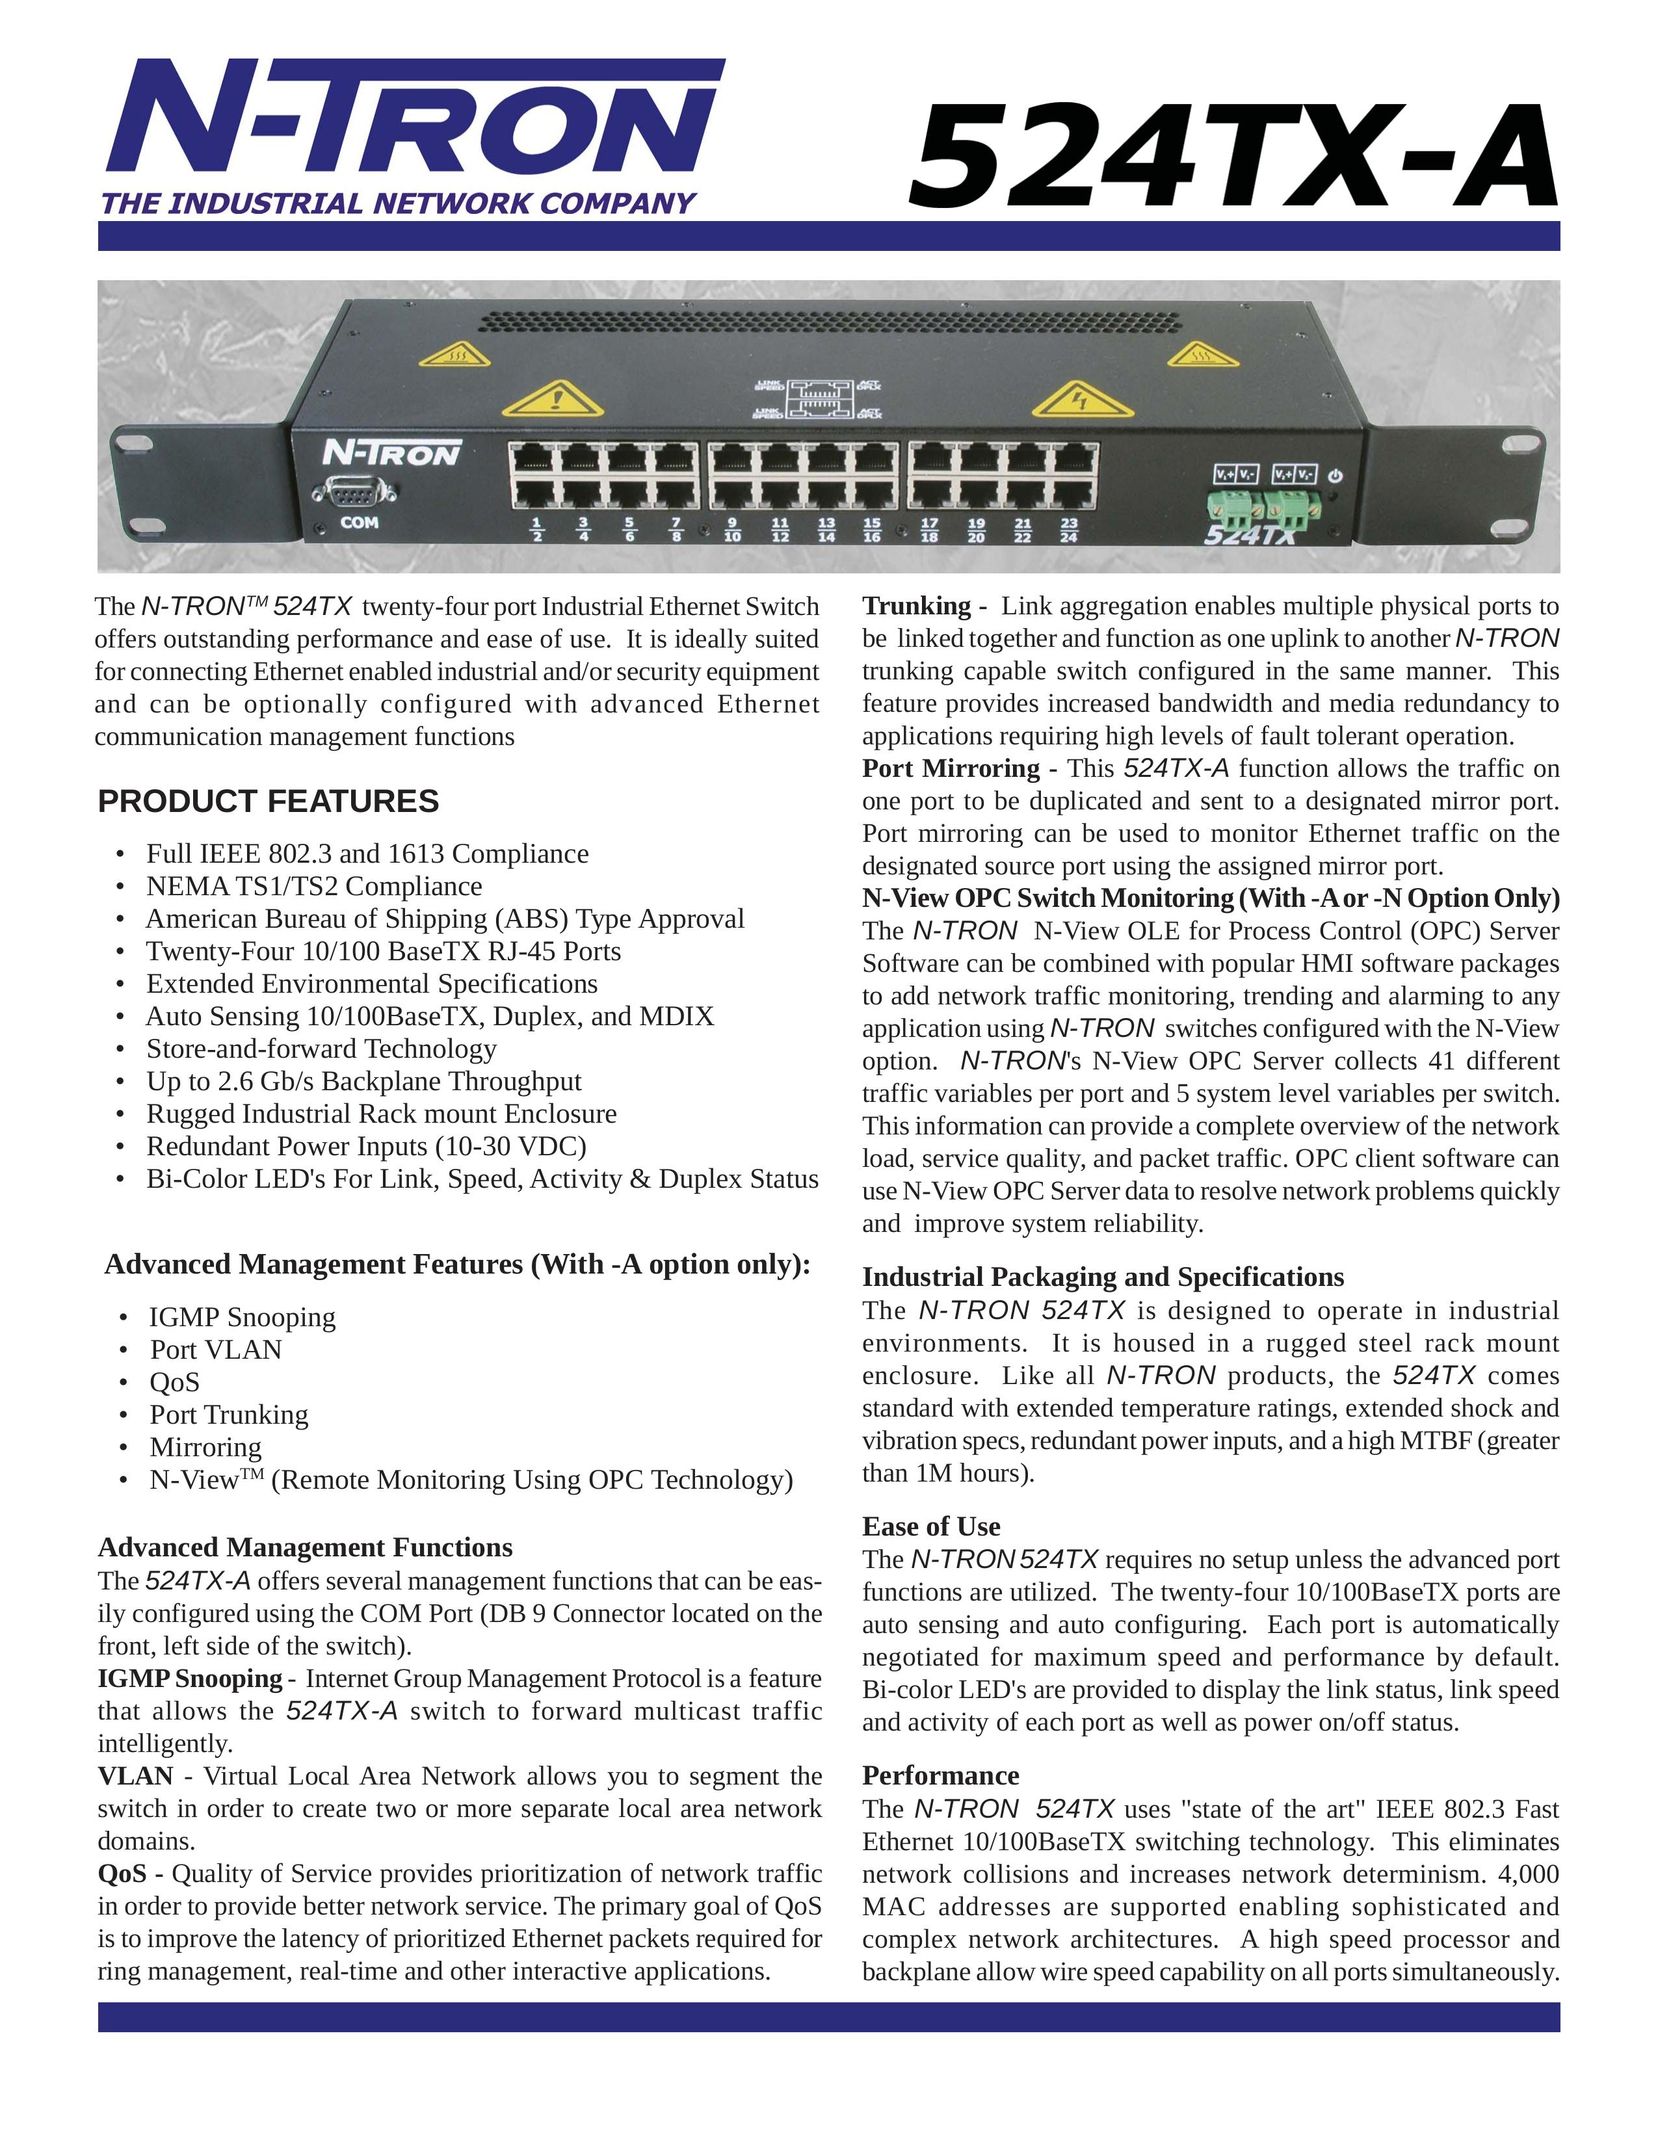 N-Tron 524TX-A Switch User Manual